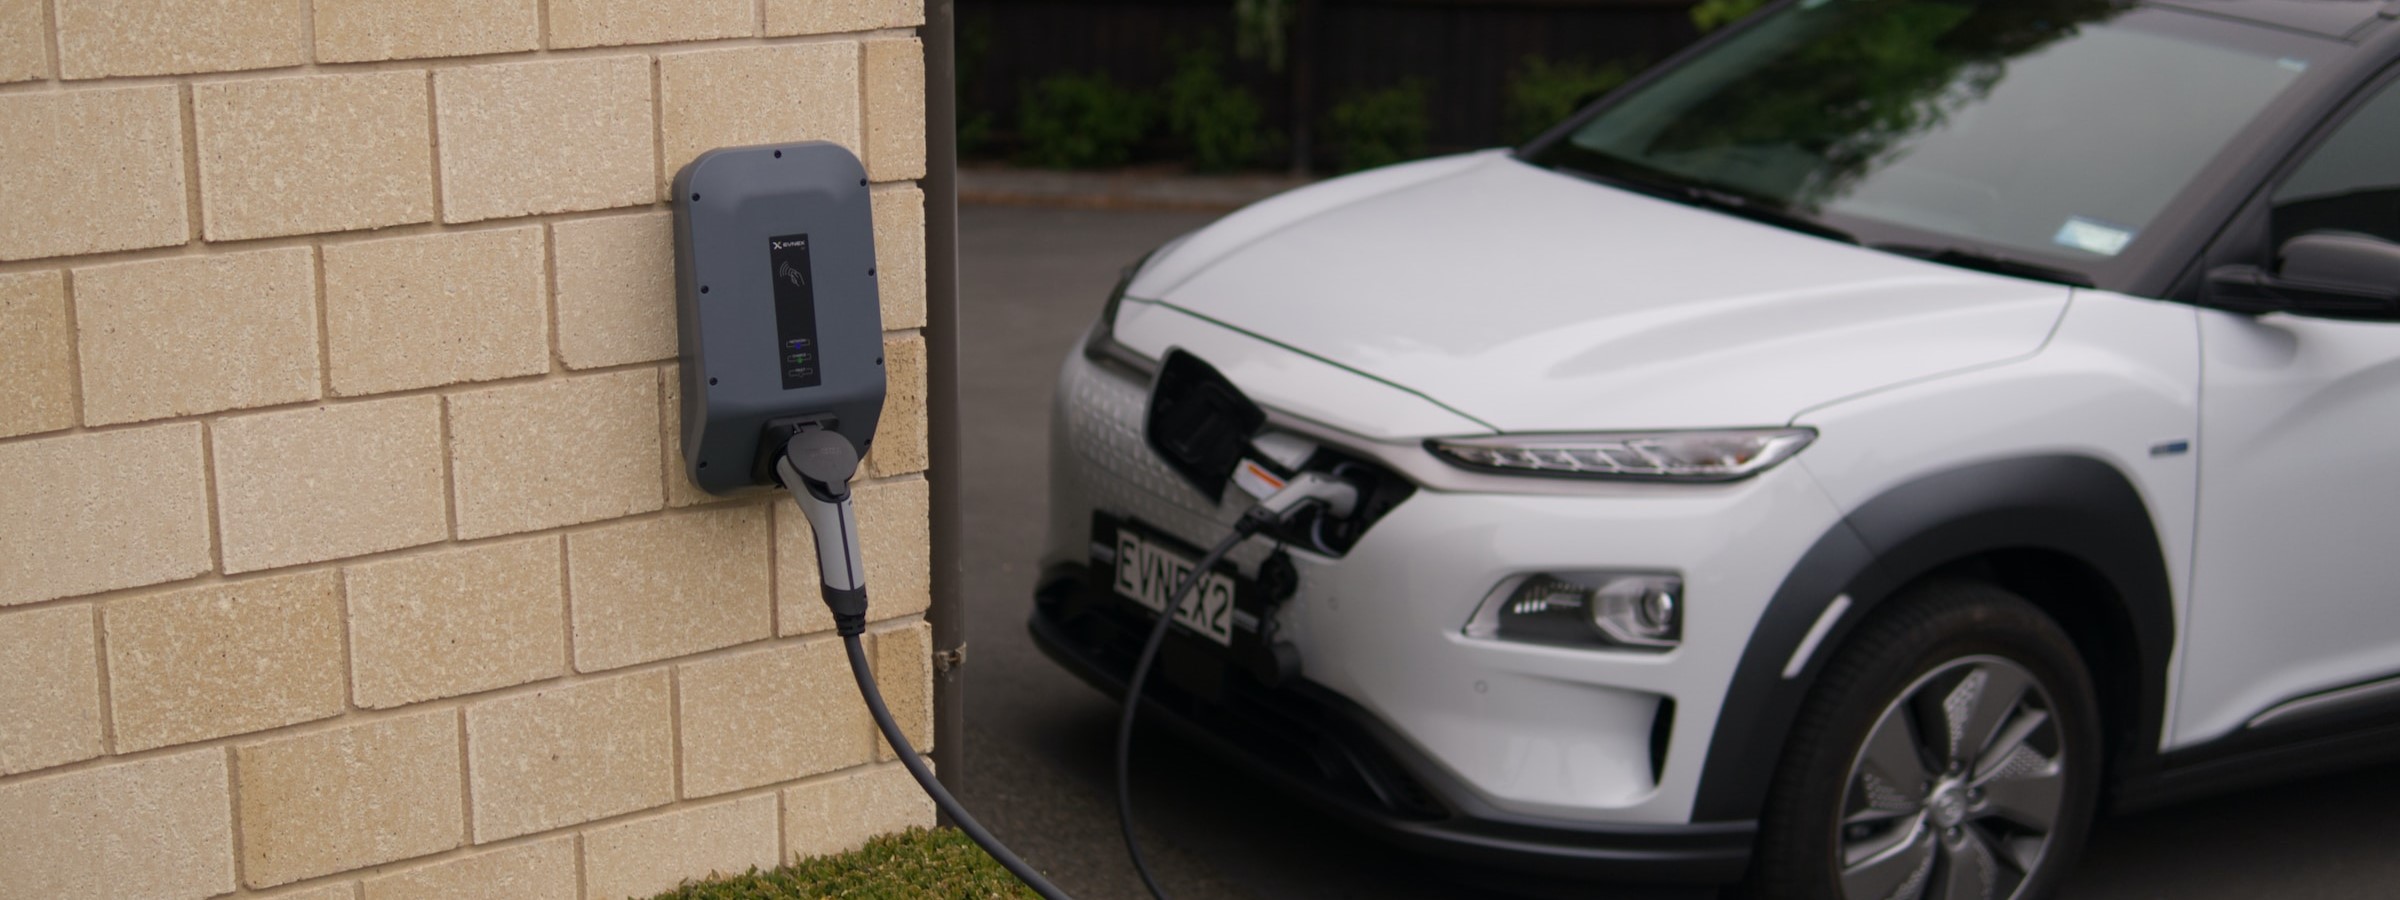 Electric Vehicle Homecharge Scheme